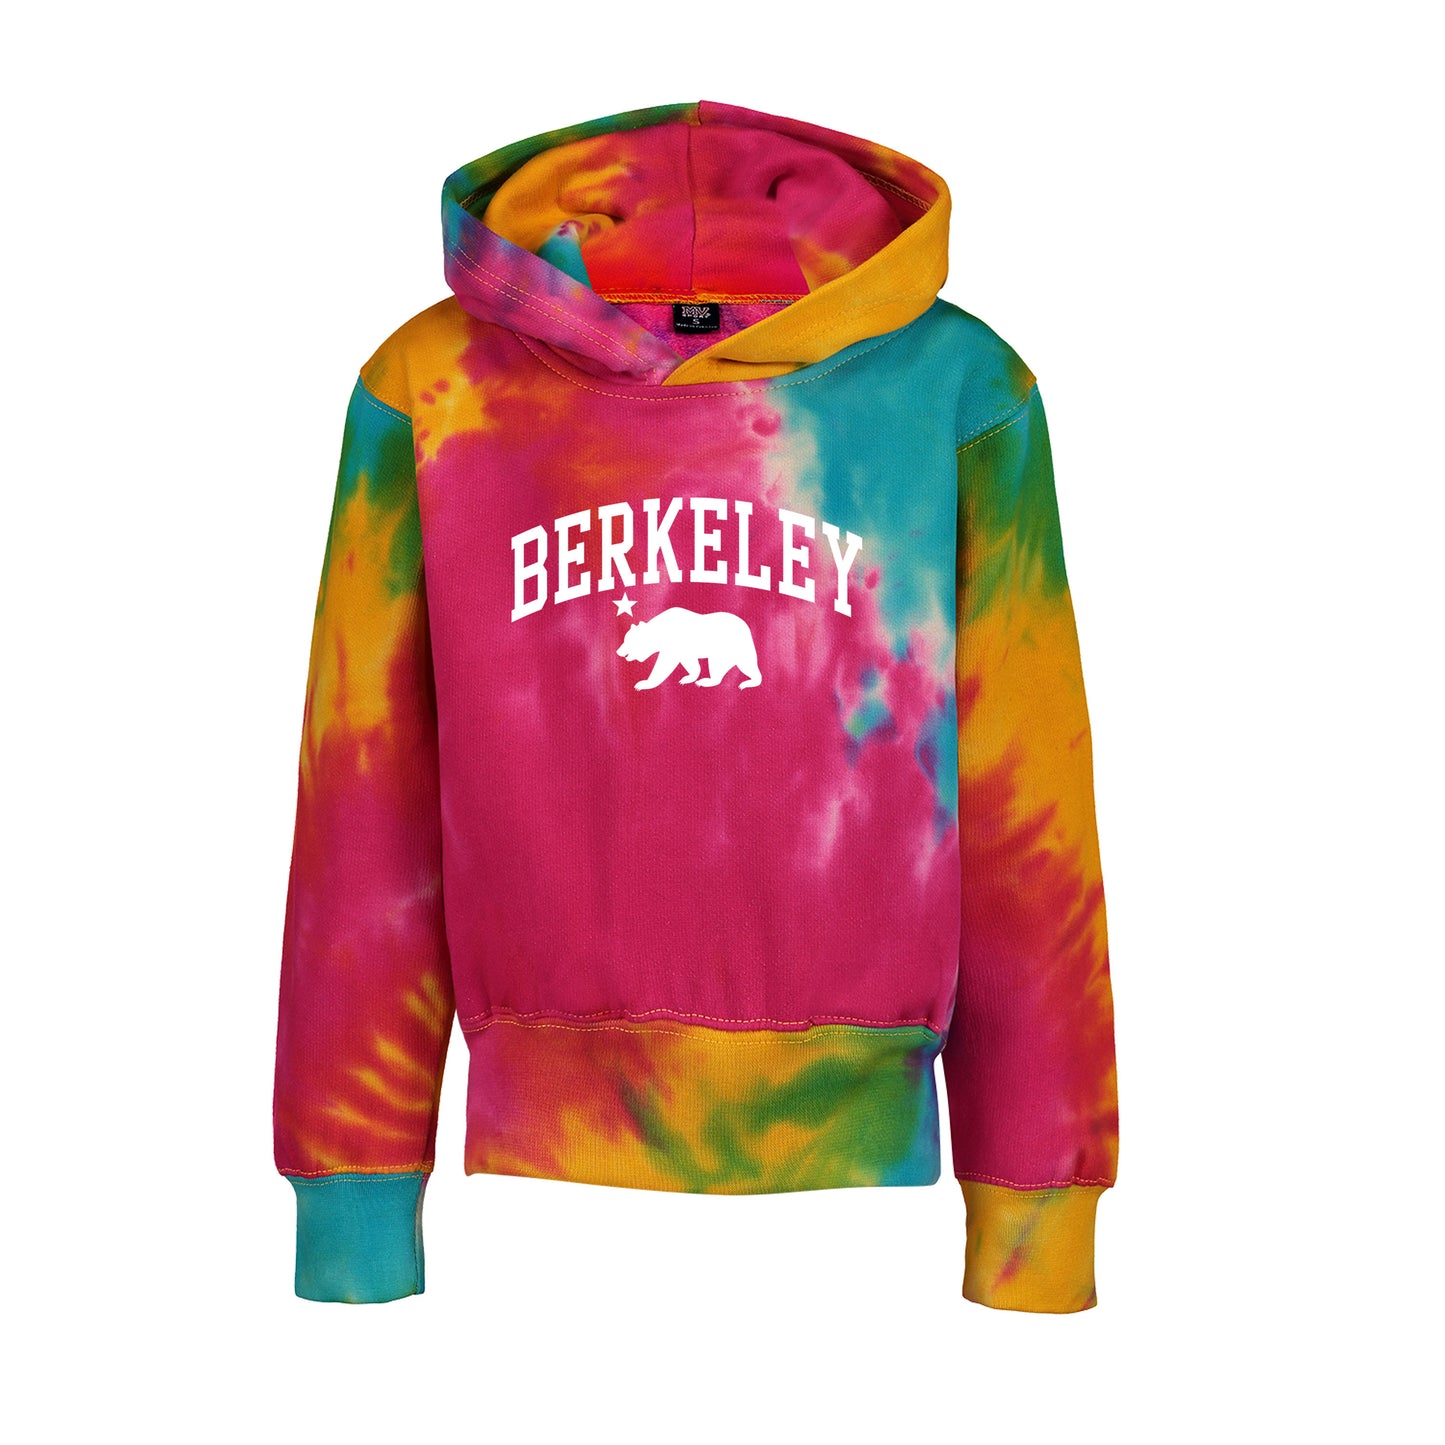 Berkeley state bear and star youth tie dye hoodie sweatshirt-Rainbow-Shop College Wear